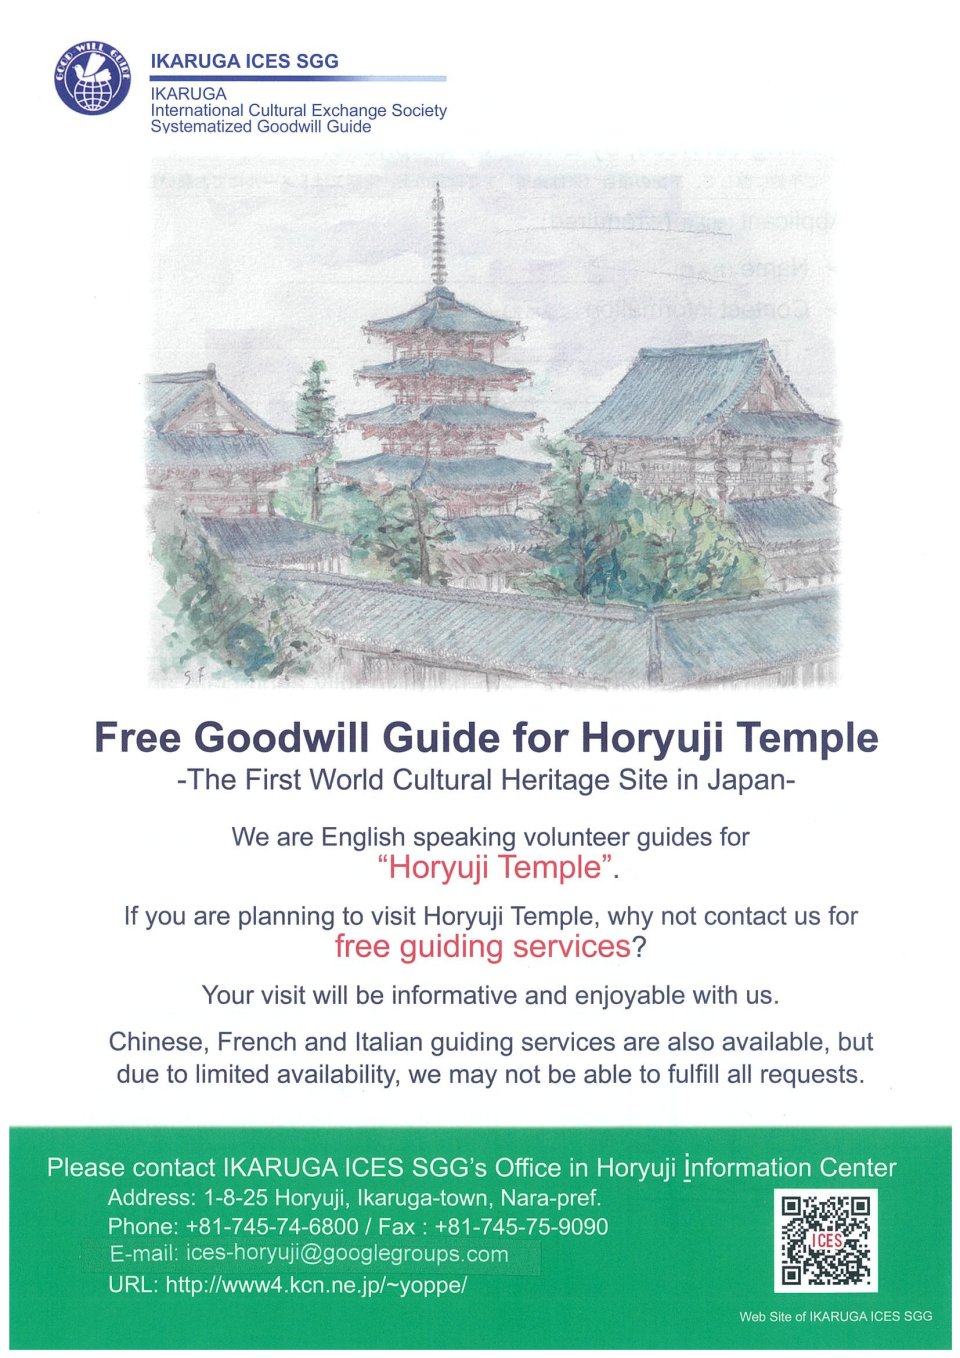 Horyuji Temple Free Goodwill Guide! 法隆寺ボランティアガイドのお知らせ。